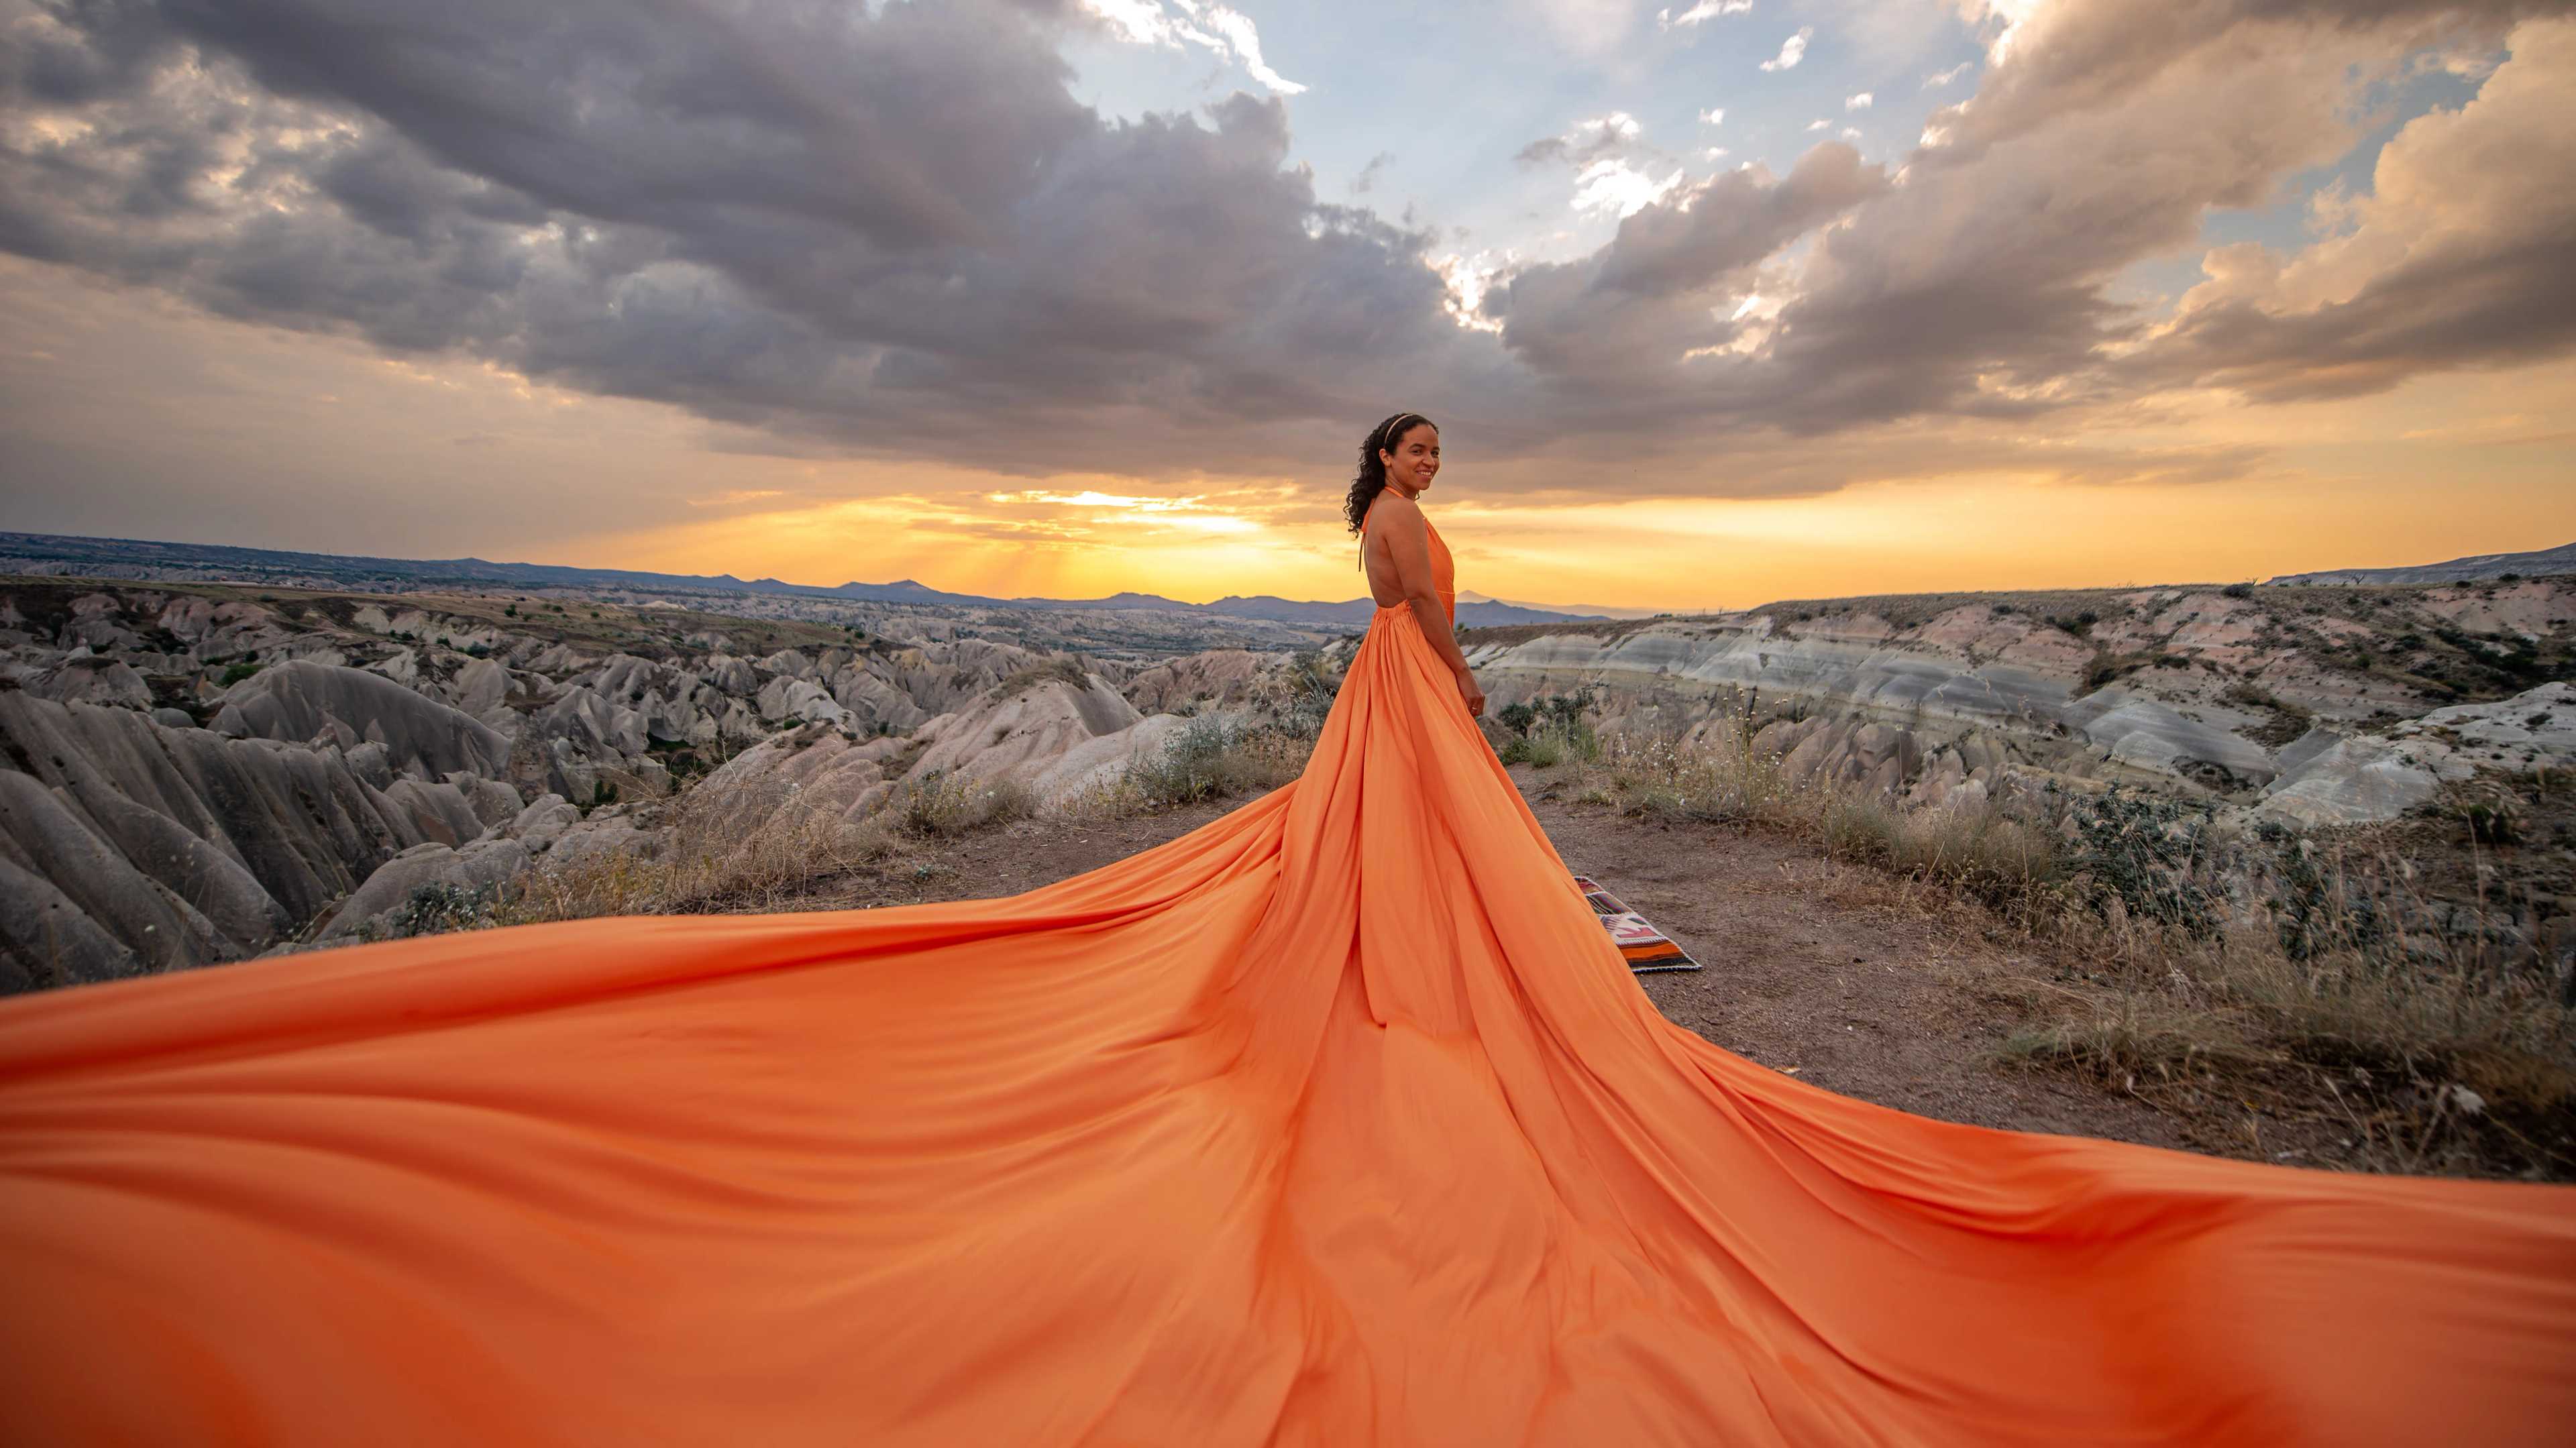 Photoshoot in Cappadocia